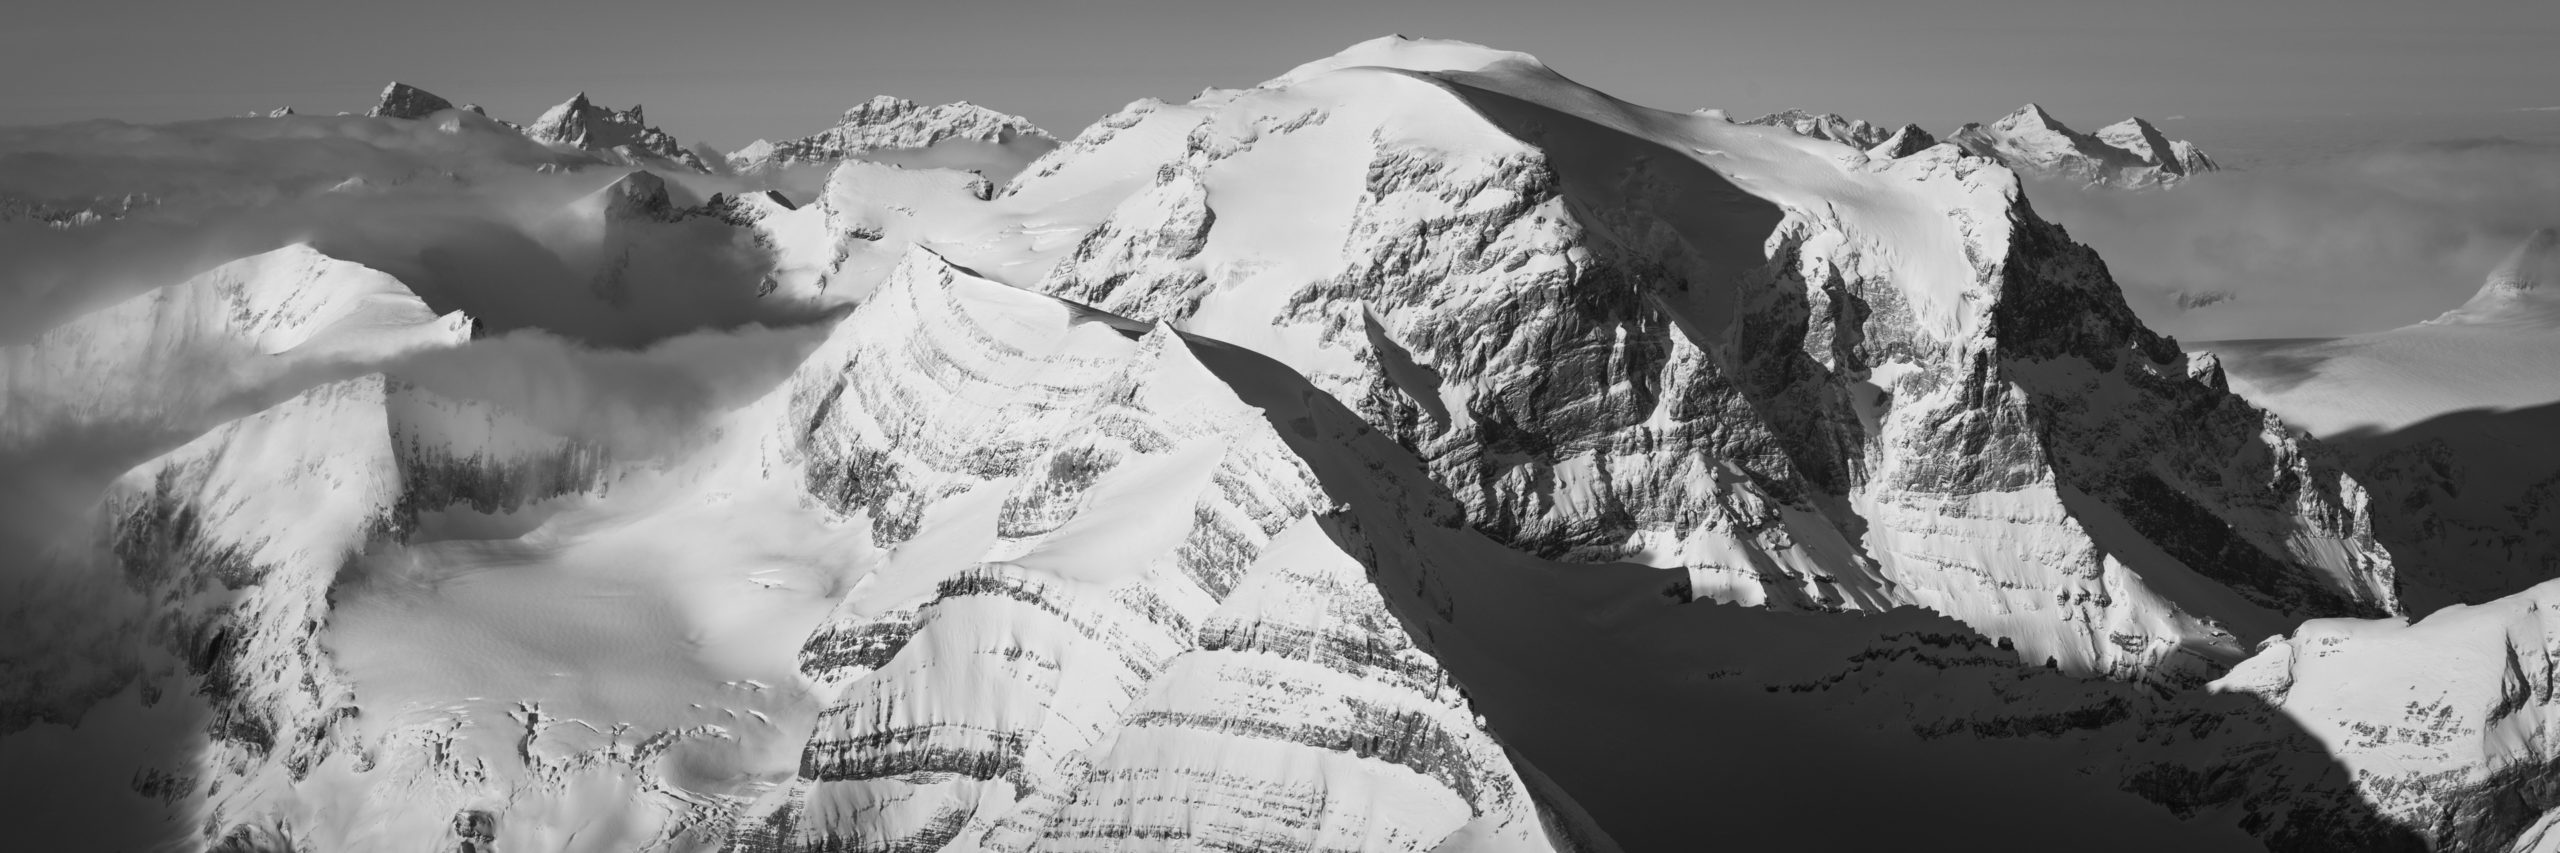 photo swiss mountain toedi - URI mountain - glacier photo - panoramic photo